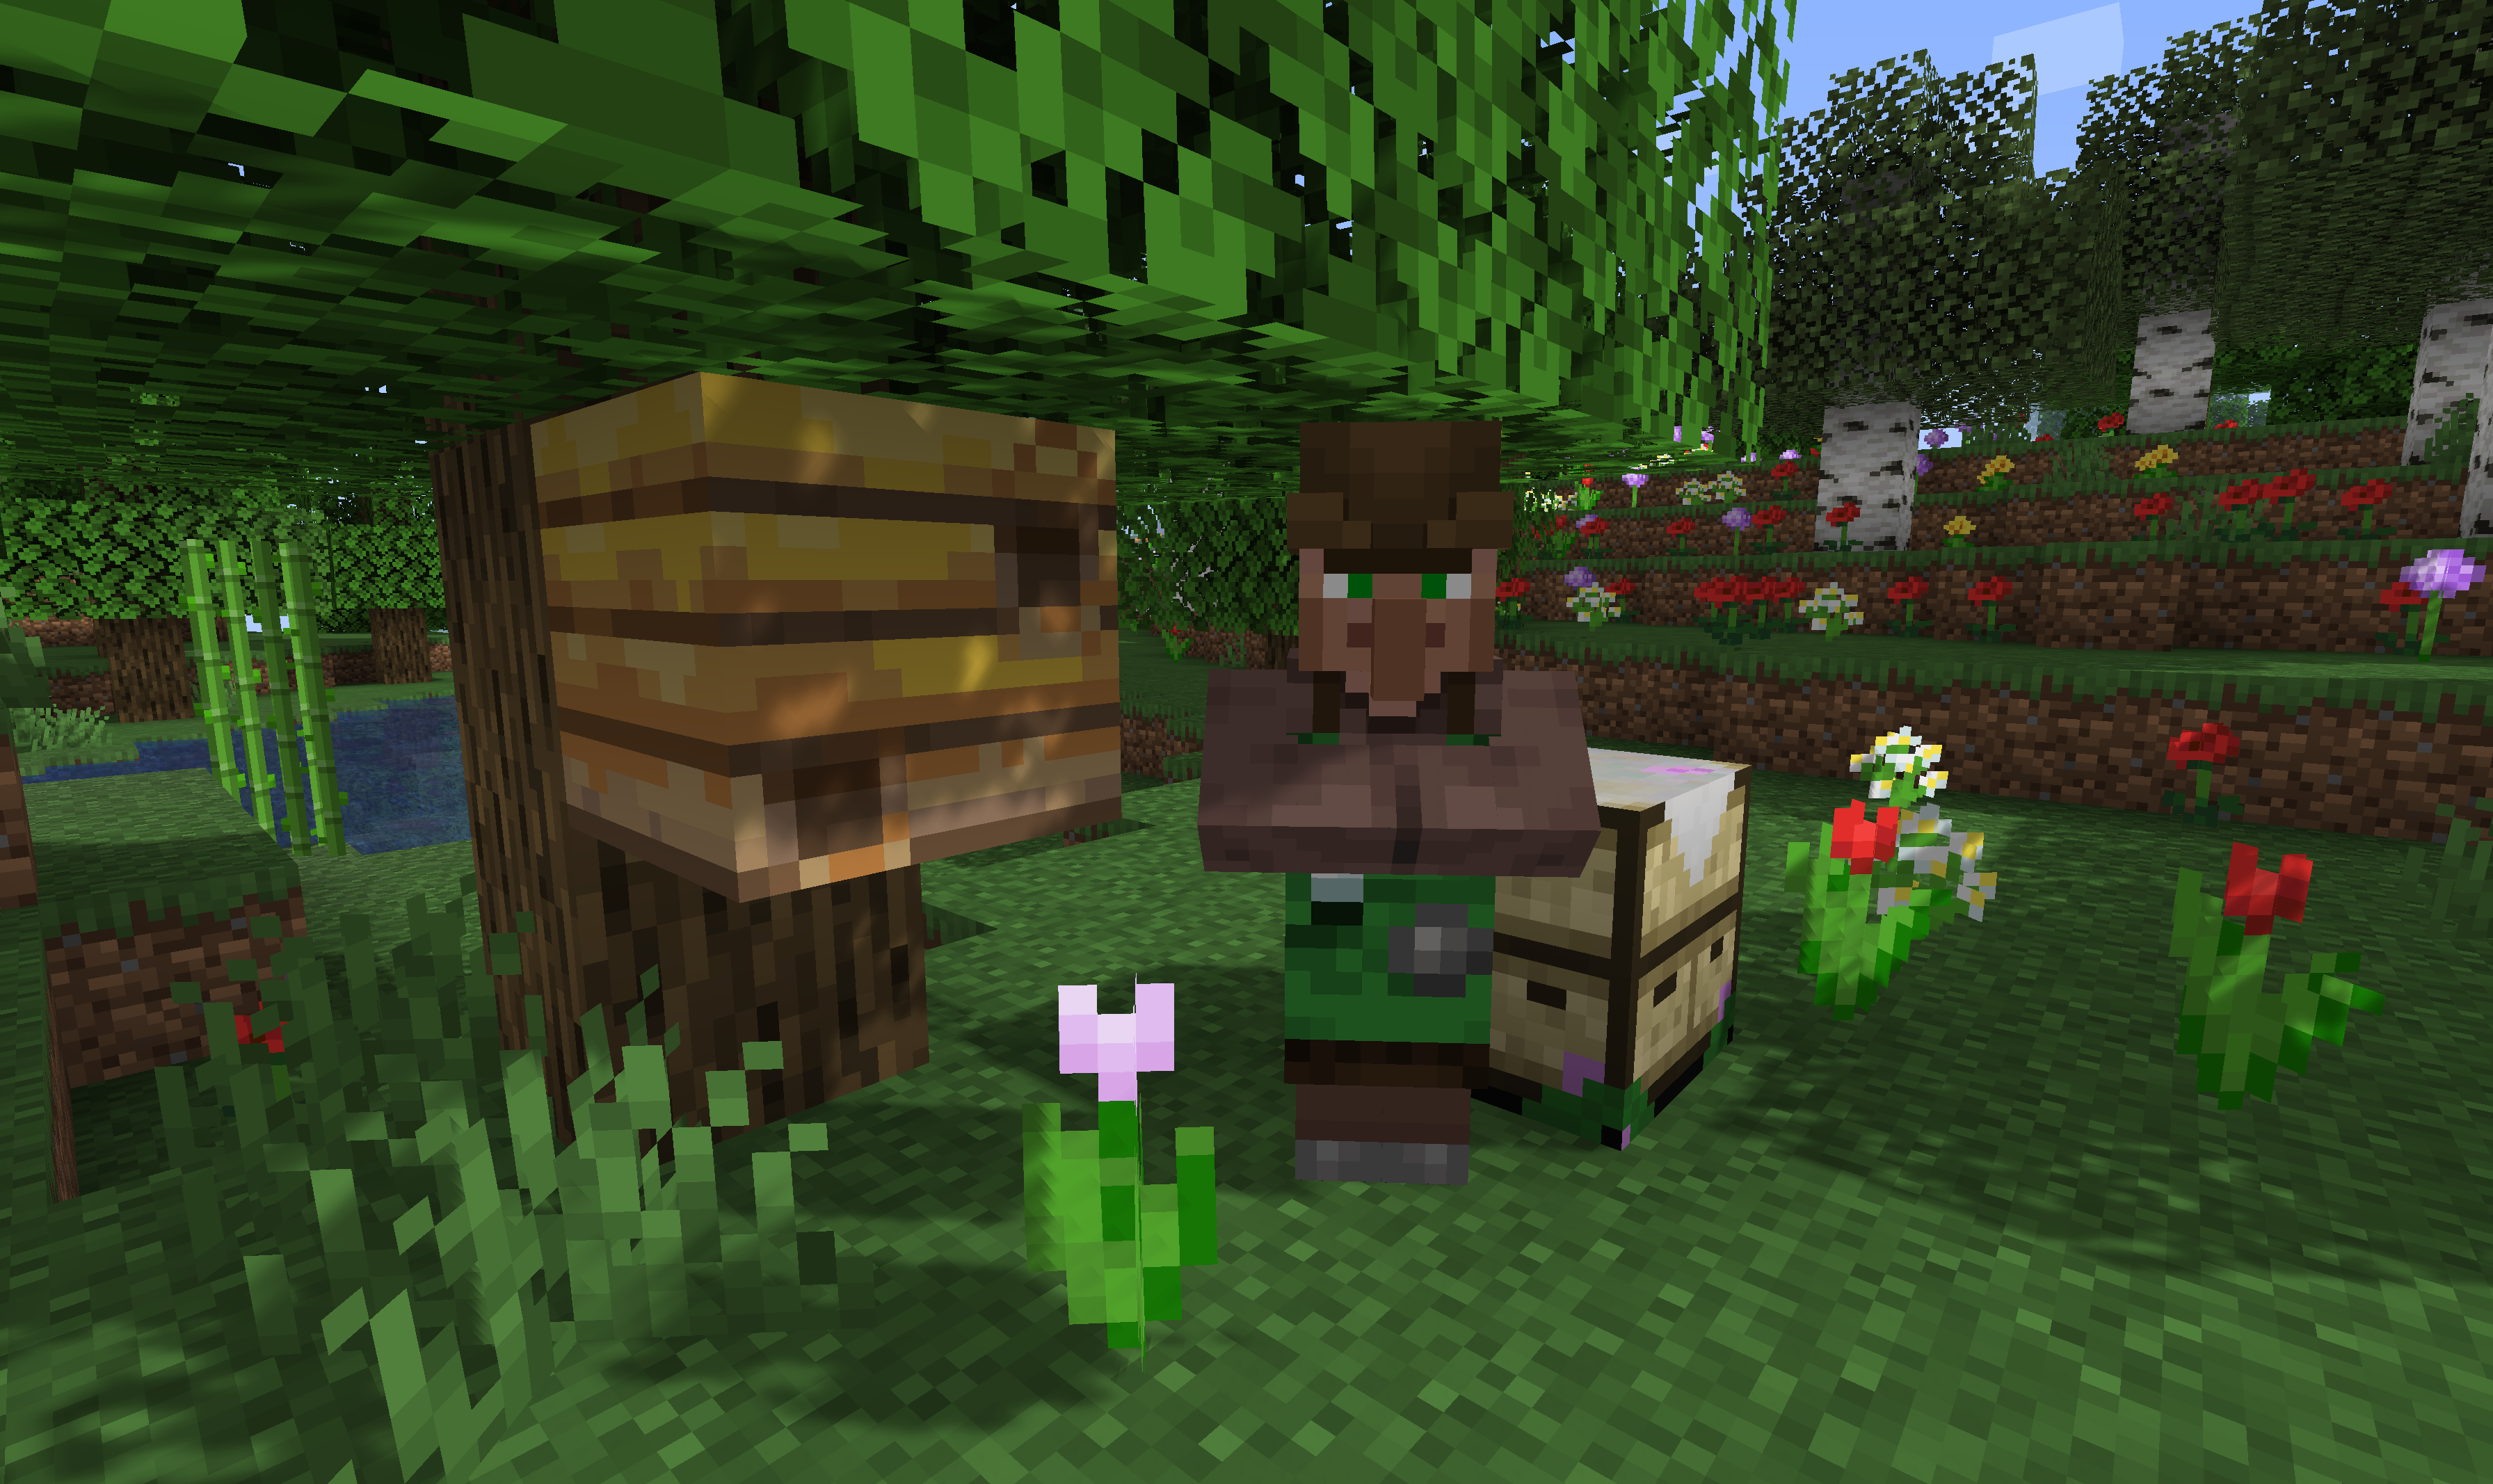 More Villagers screenshot 3